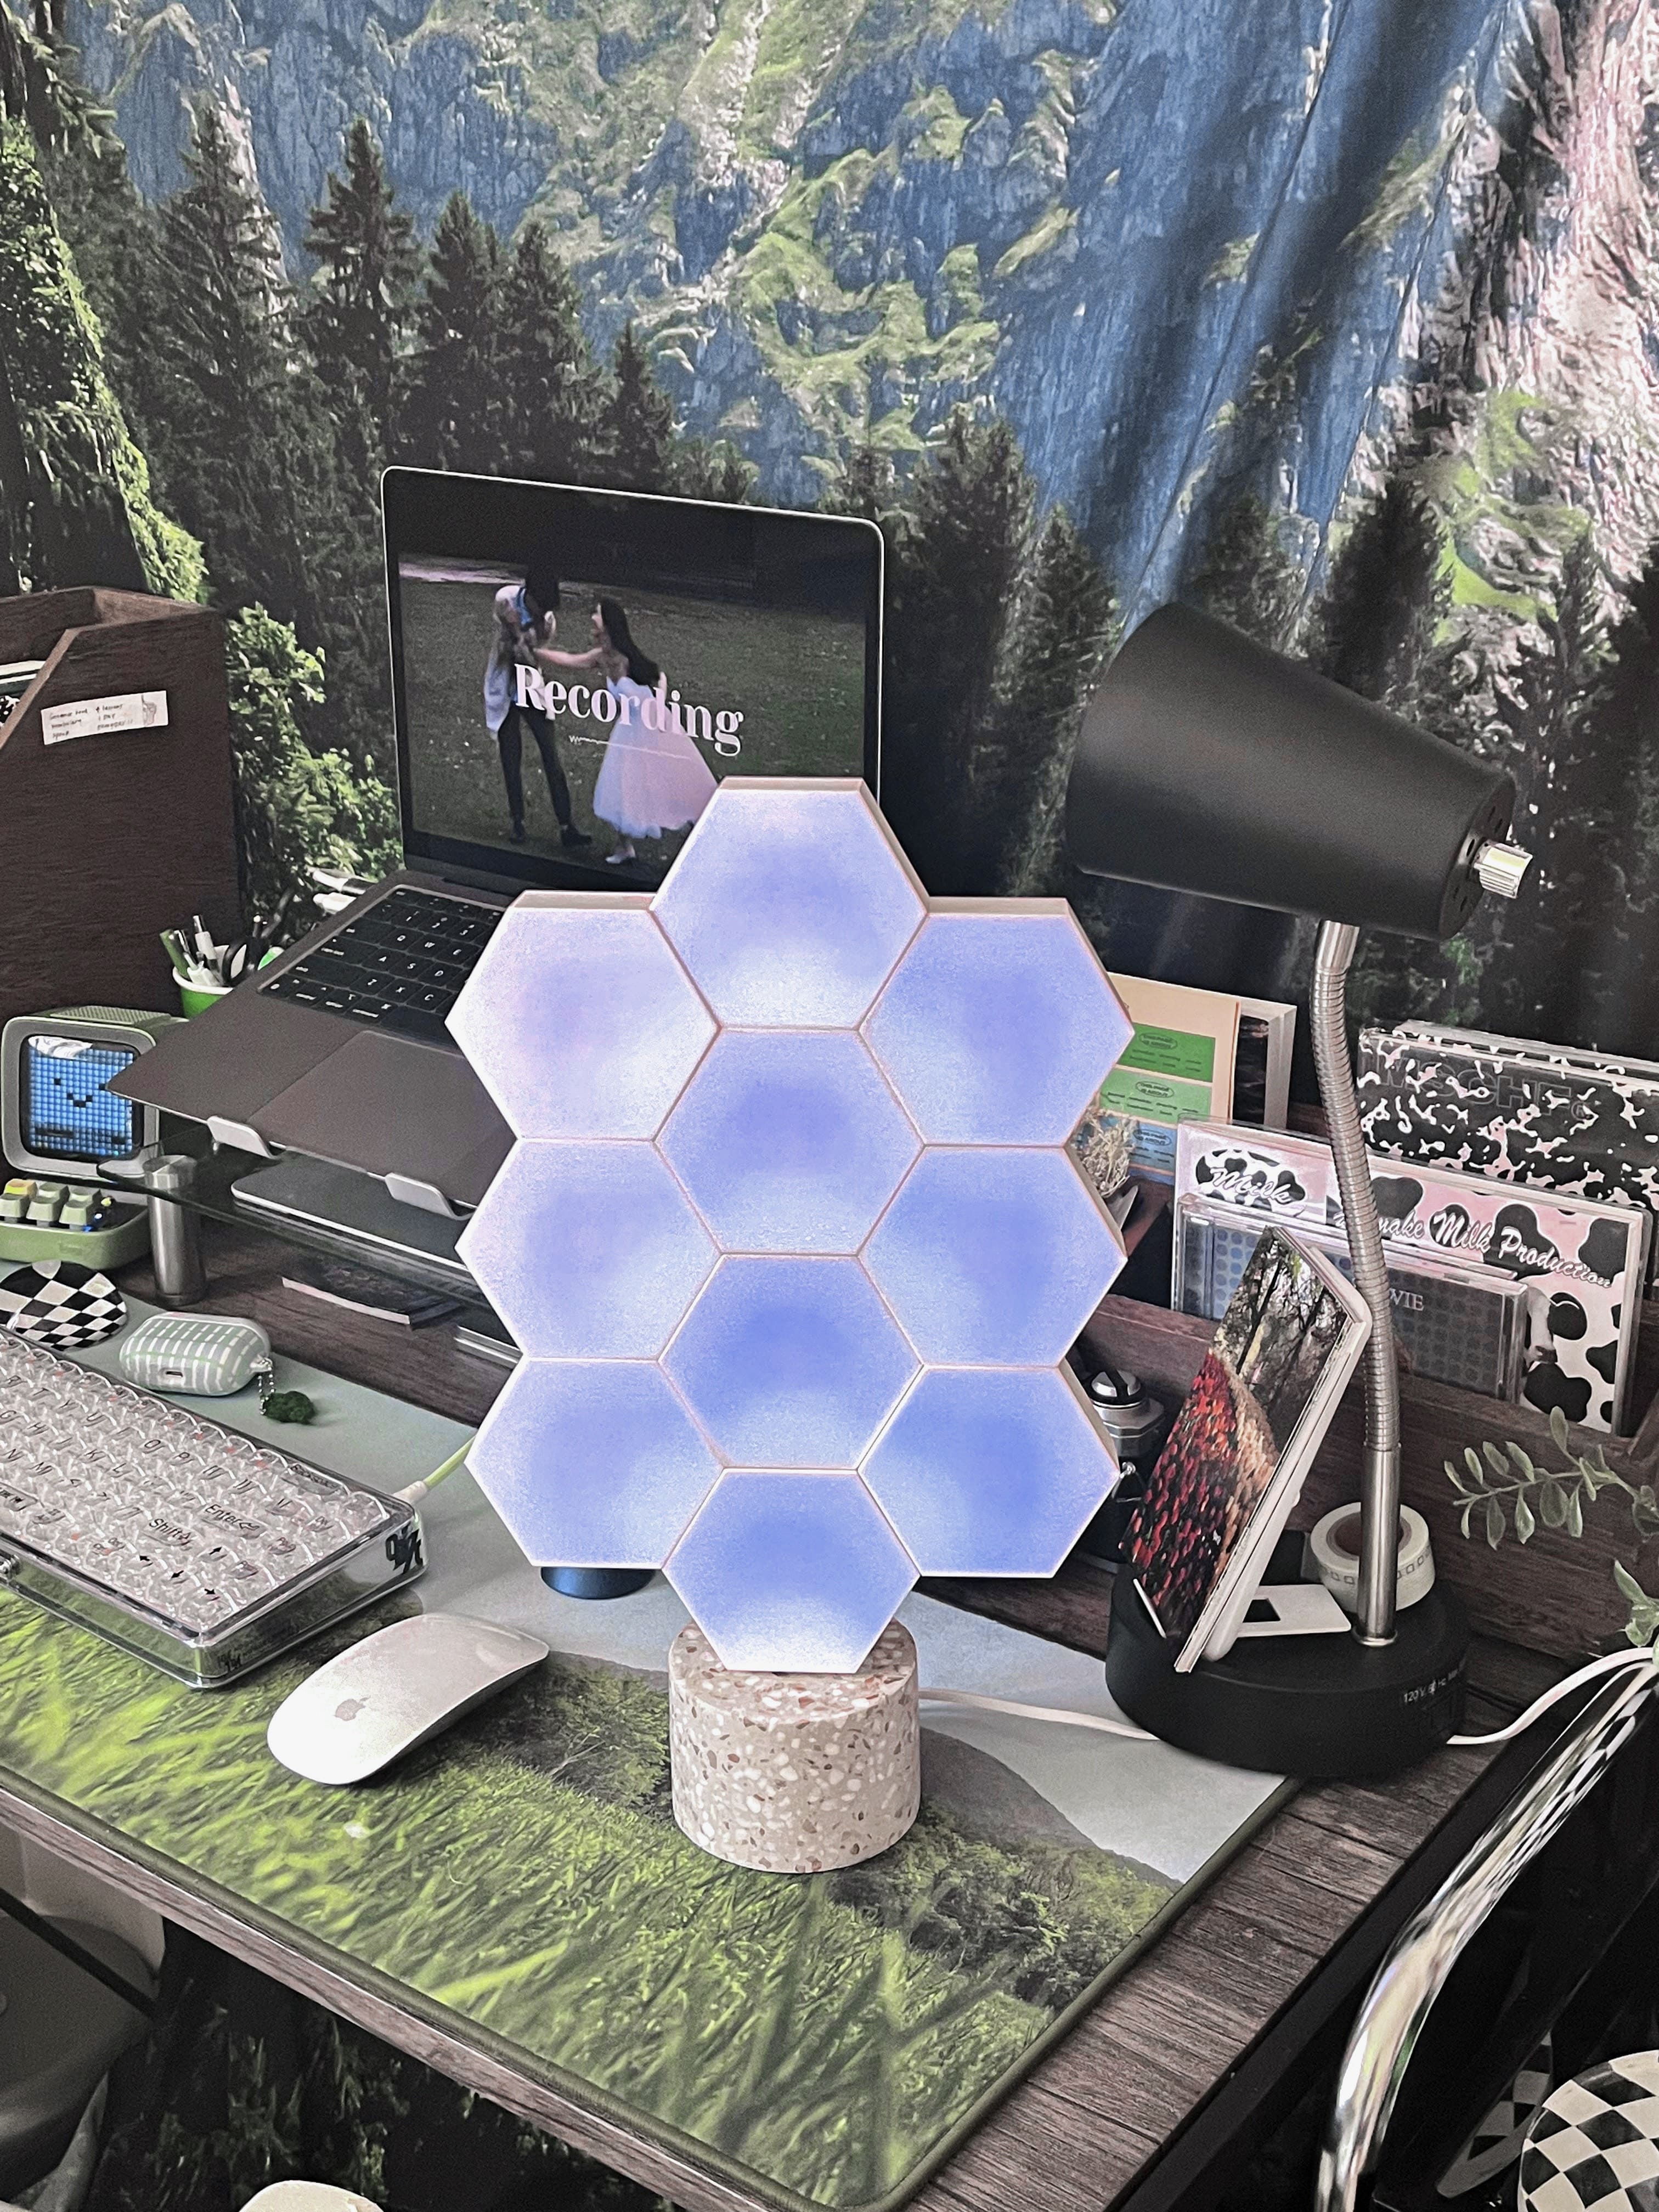 Cololight pro rgb led hexagon light panels - heart lit